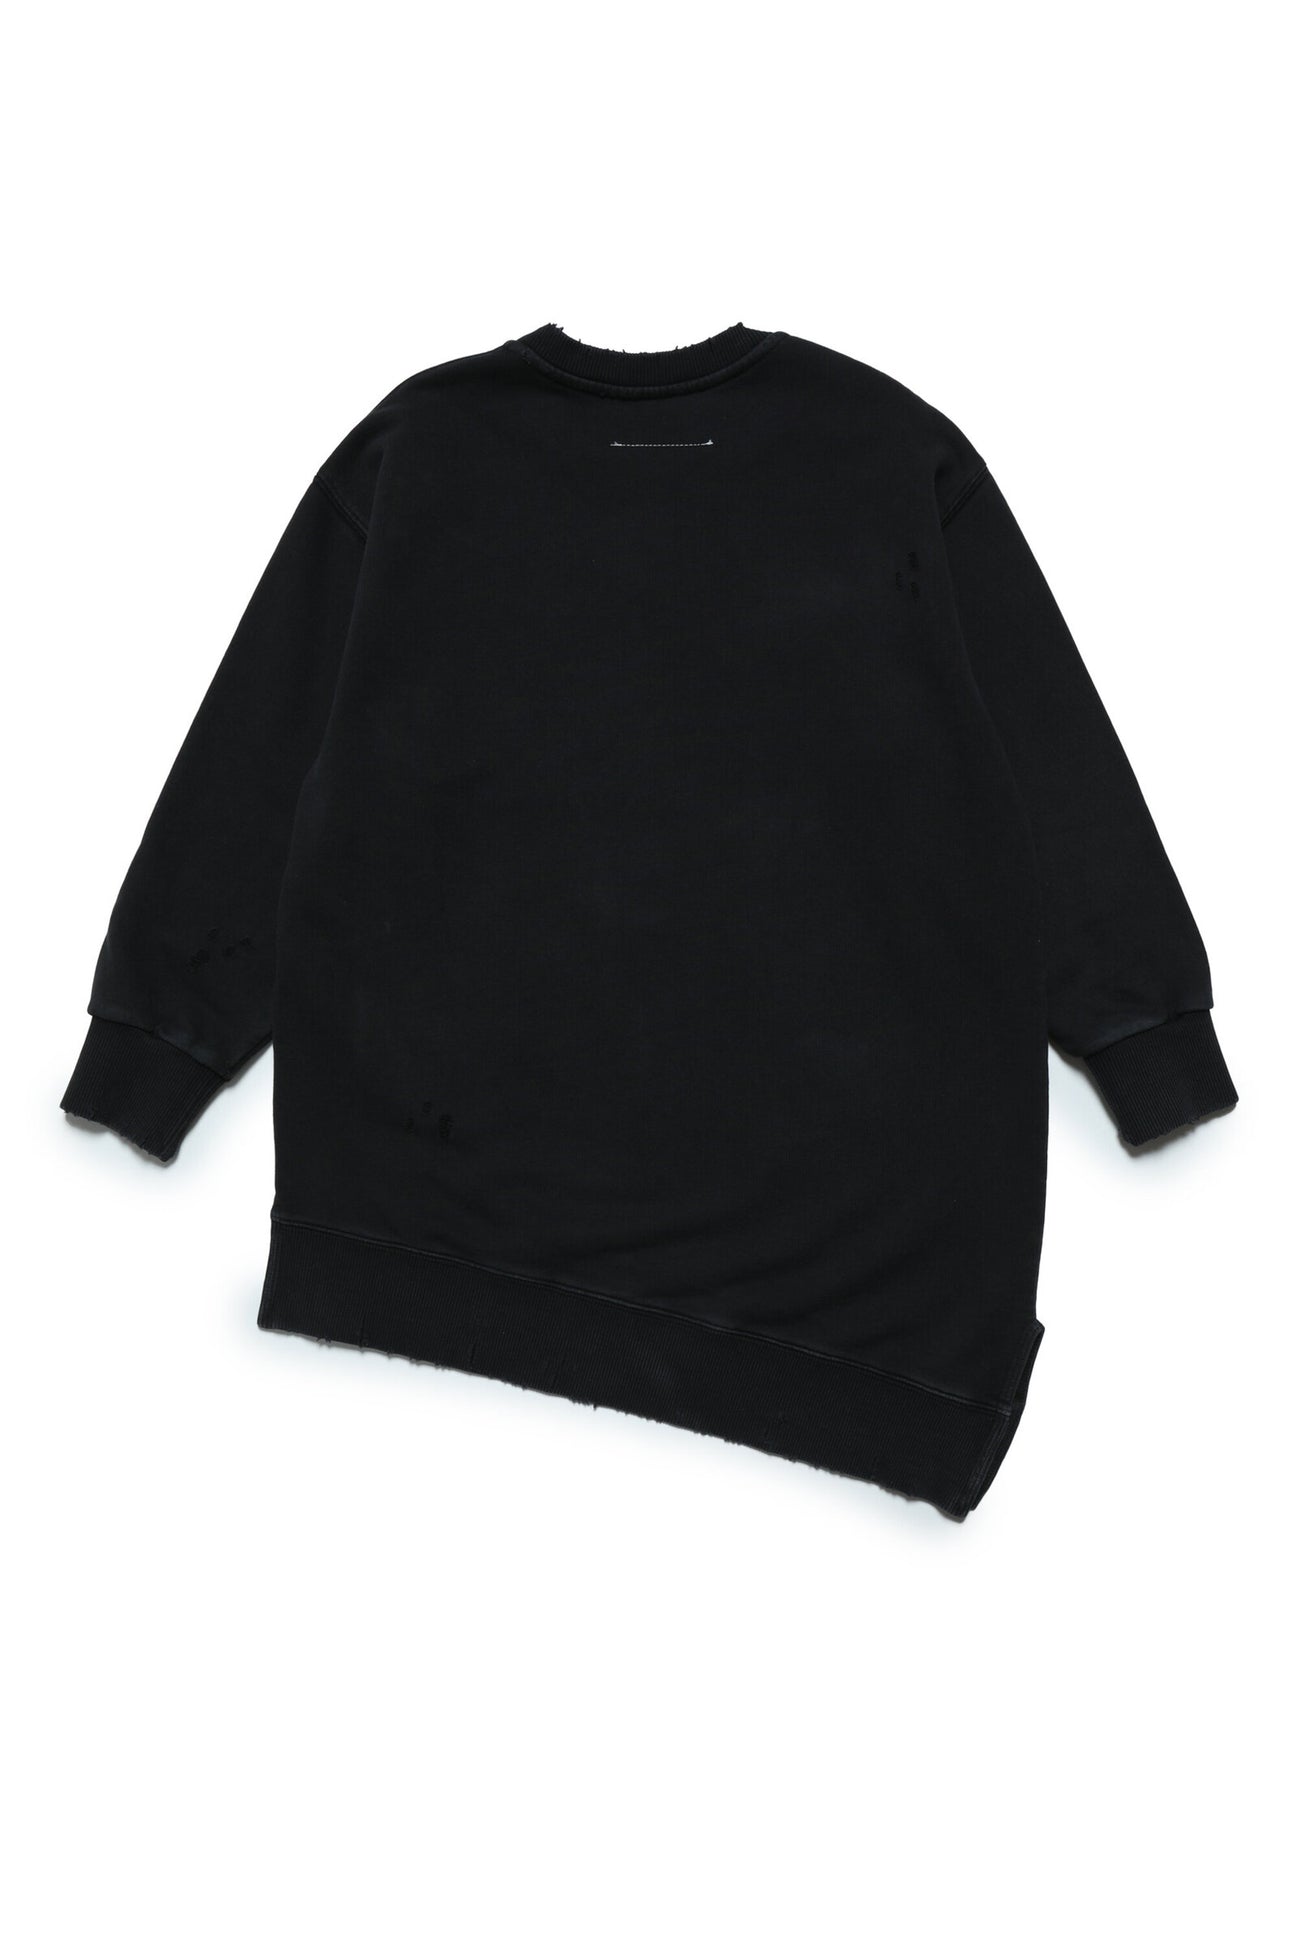 Cotton maxi-sweatshirt dress with logo and breaks Cotton maxi-sweatshirt dress with logo and breaks